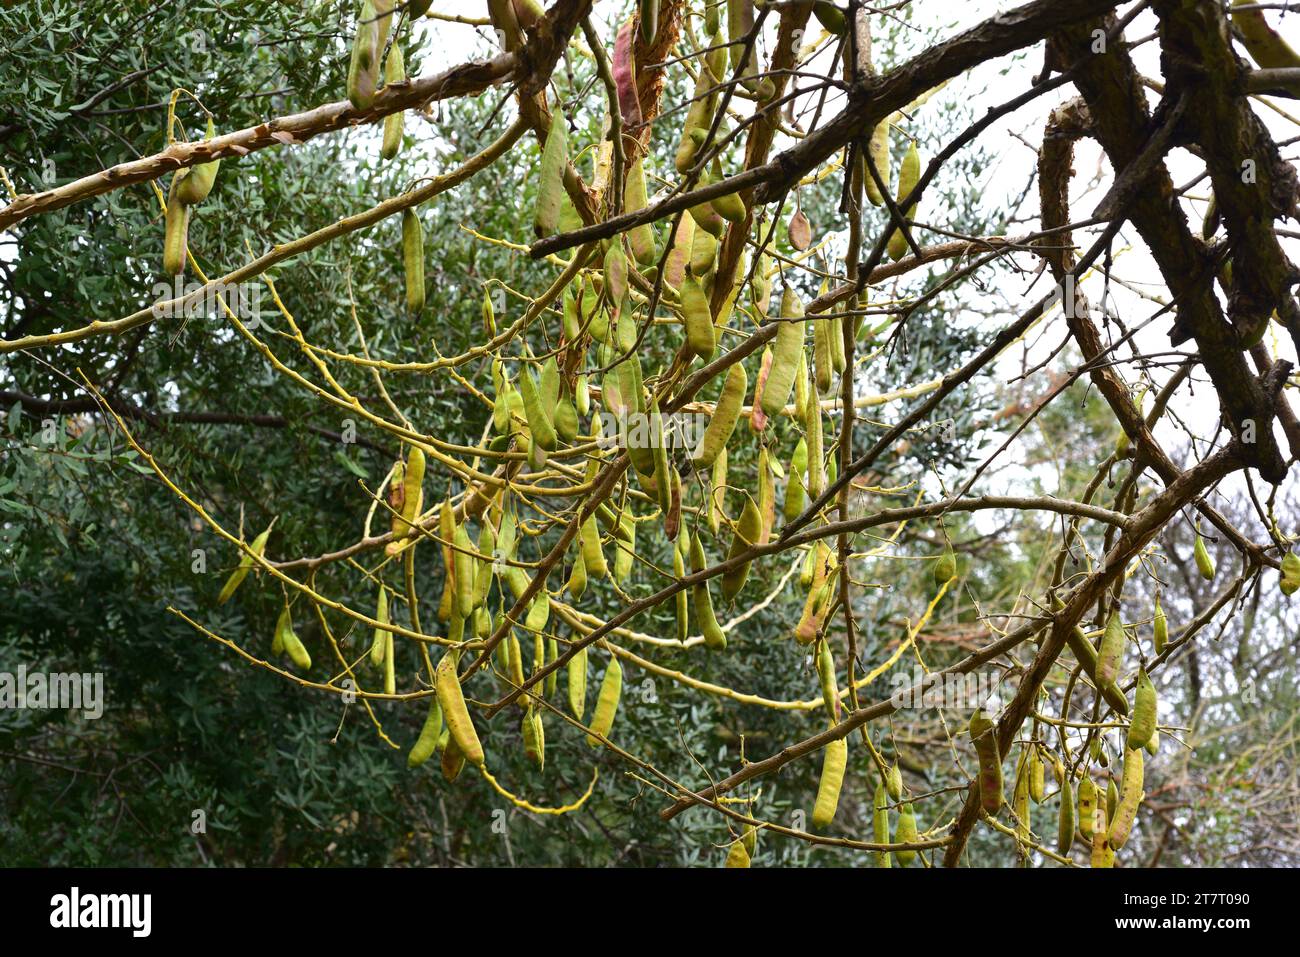 Paperbark thorn (Acacia sieberiana or Vachellia sieberiana) is a medicinal and toxic tree native to sub-saharan Africa. Fruits detail. Stock Photo